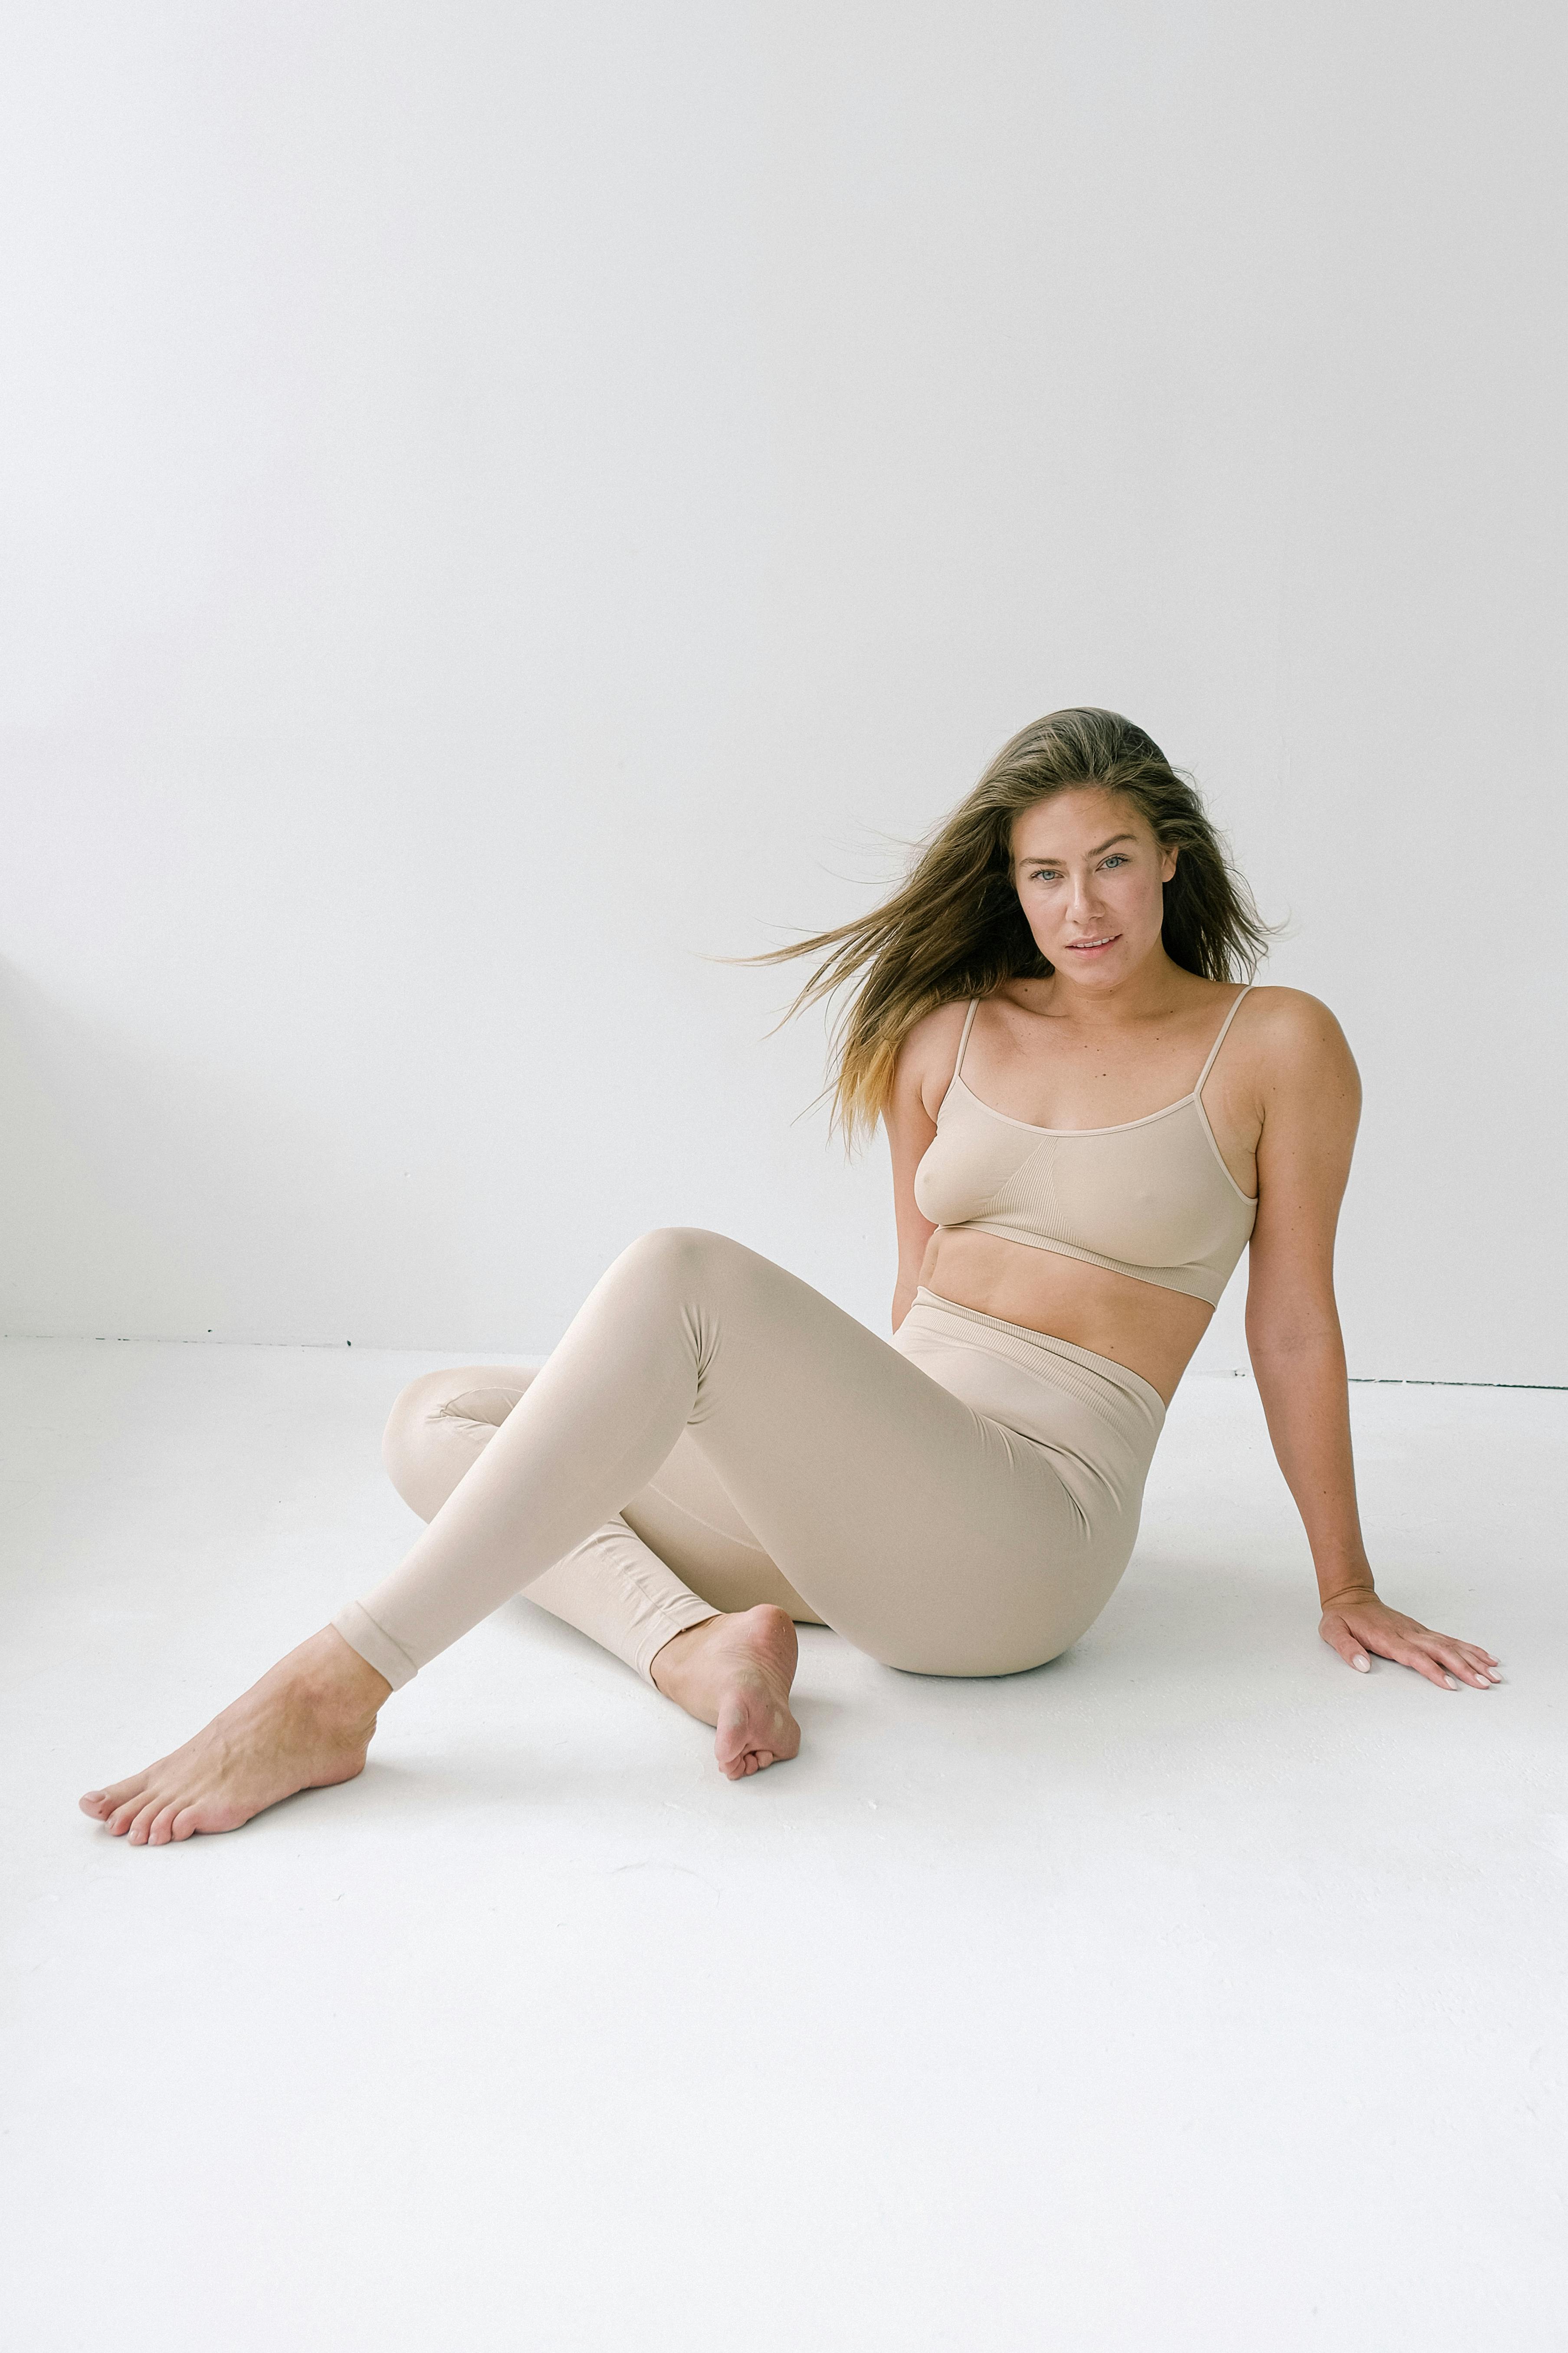 Slim woman sitting on floor in studio · Free Stock Photo